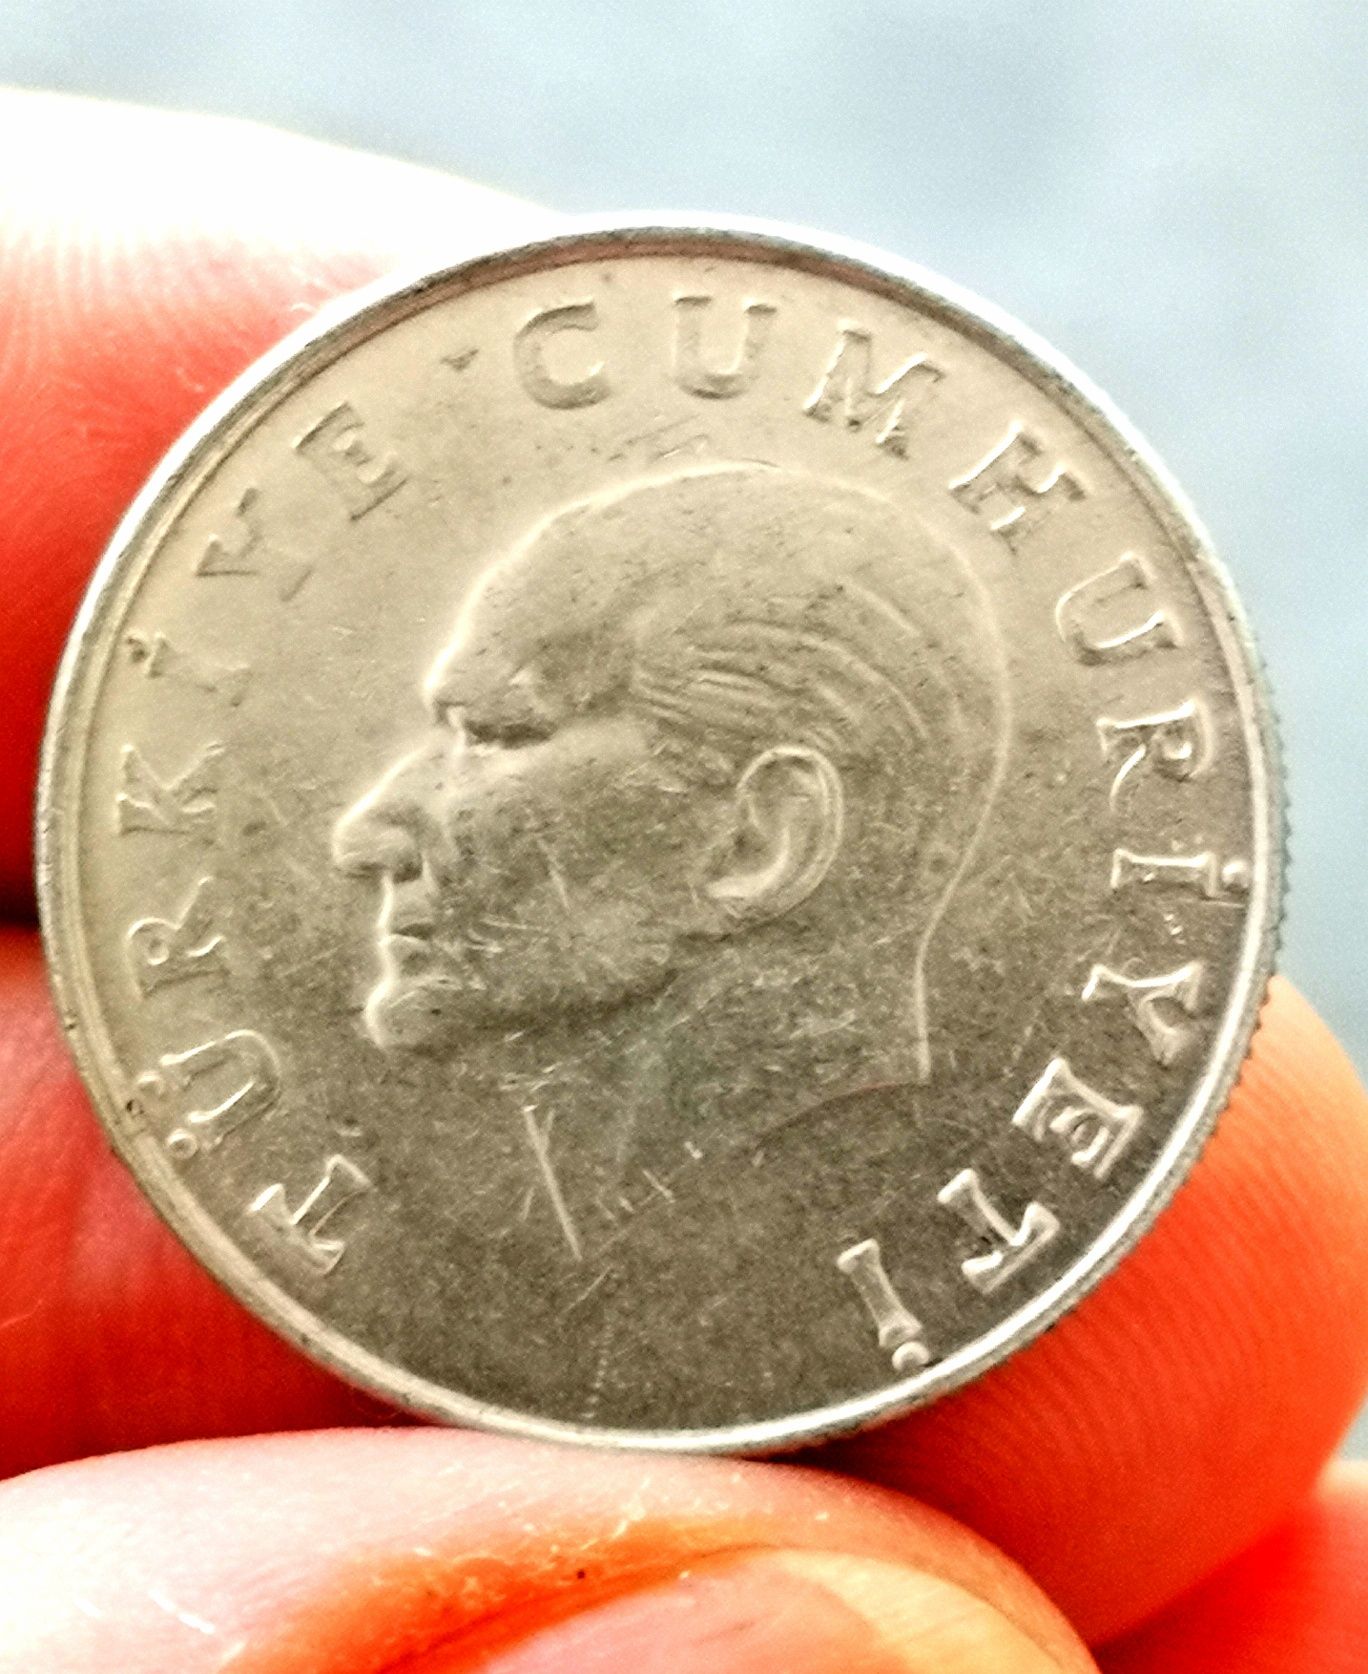 Moneta 25 lira Turcja 1986r